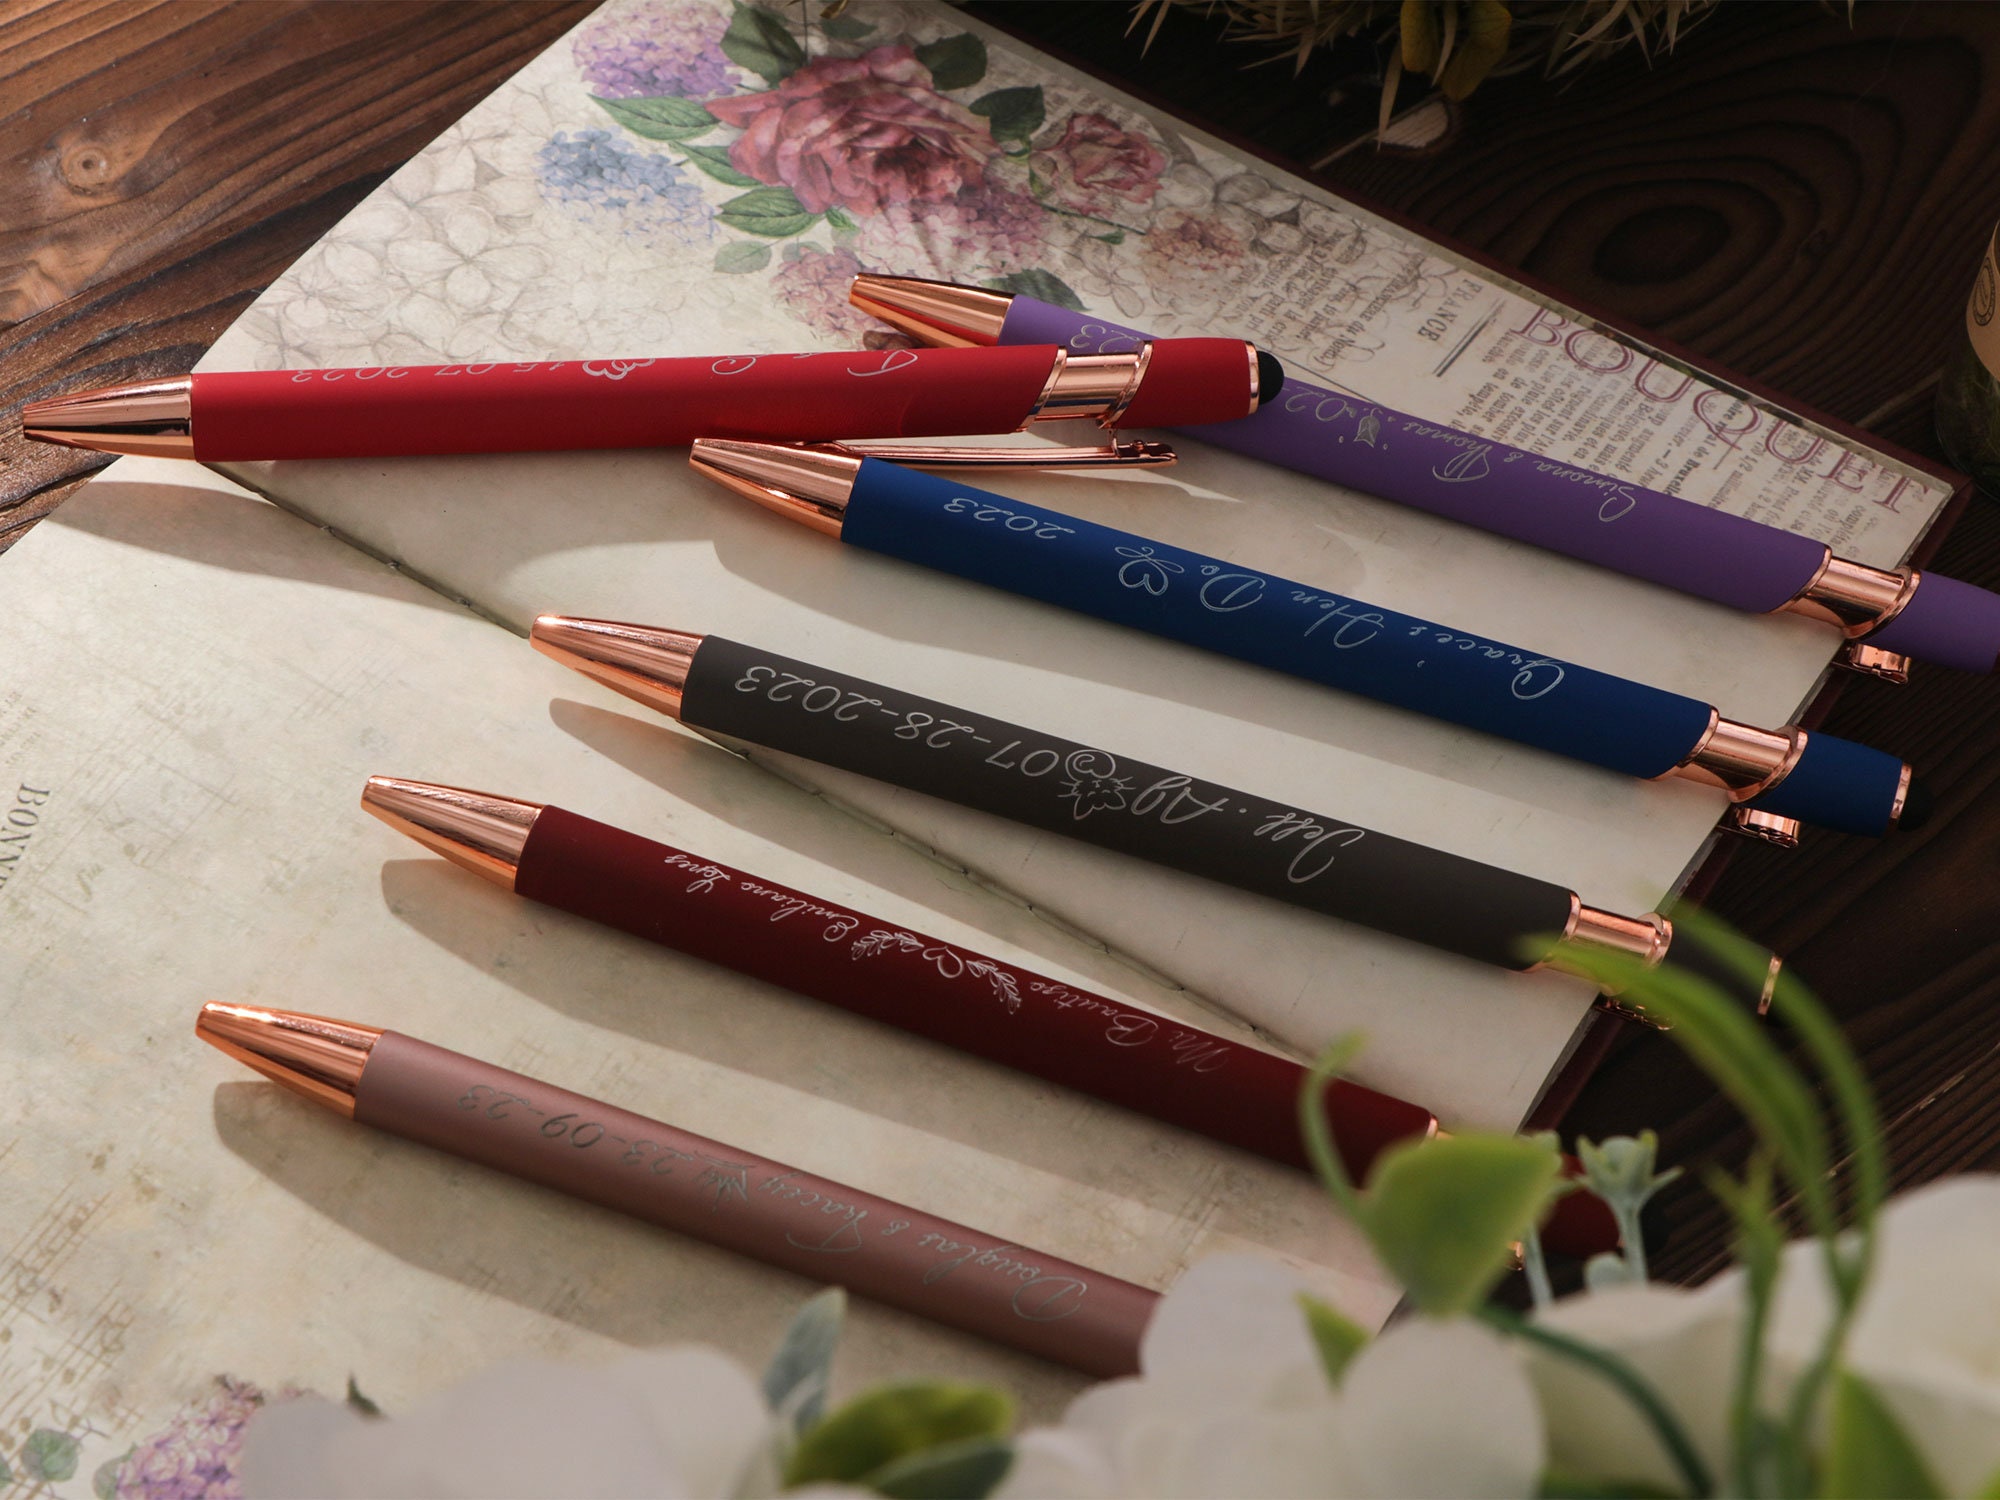 HCrystals Journaling Pen Set - 3pcs Healing Crystals Rose Gold Pens - Fancy  Pens, Diamond Pens, Witchy gifts, Inspirational Engraved Pens, Spiritual